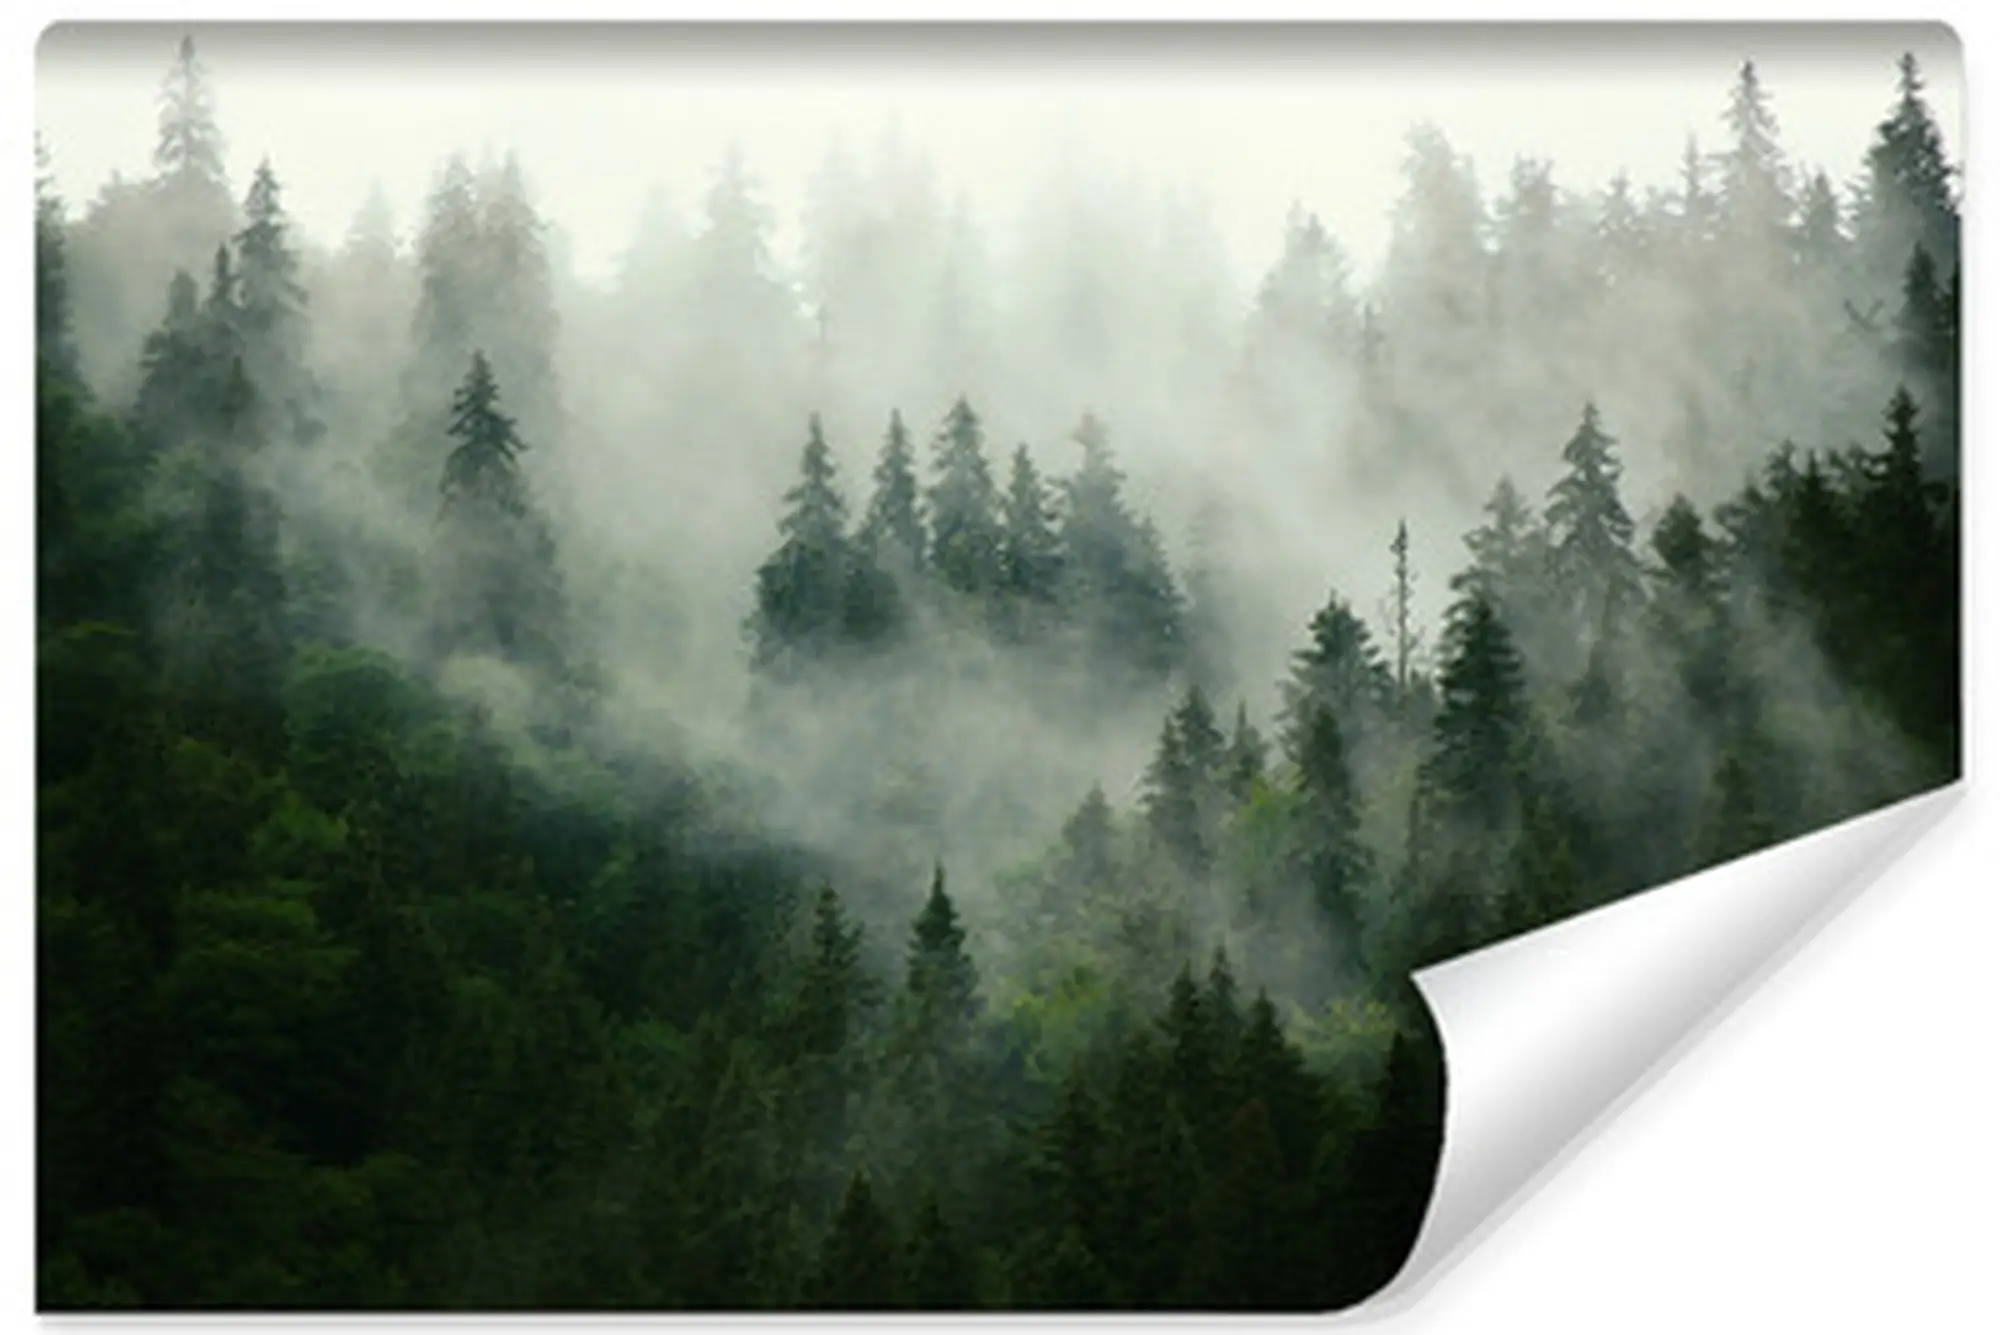 Fototapete Wald Nebel 3D Landschaft im